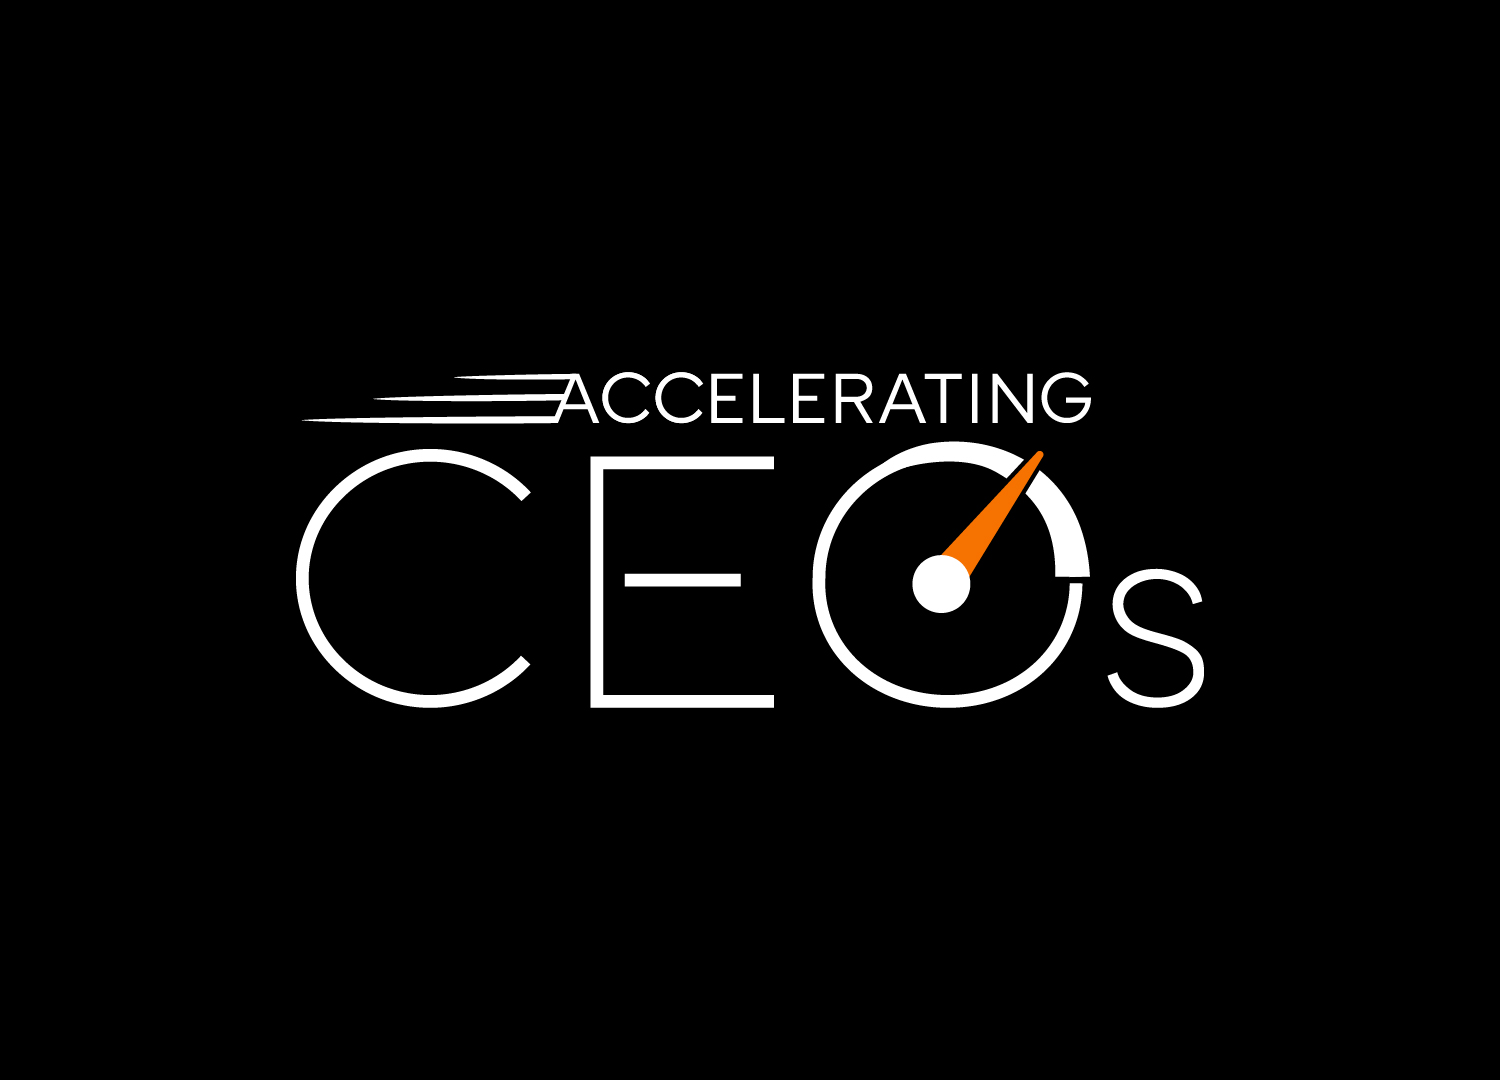 Accelerating CEOs